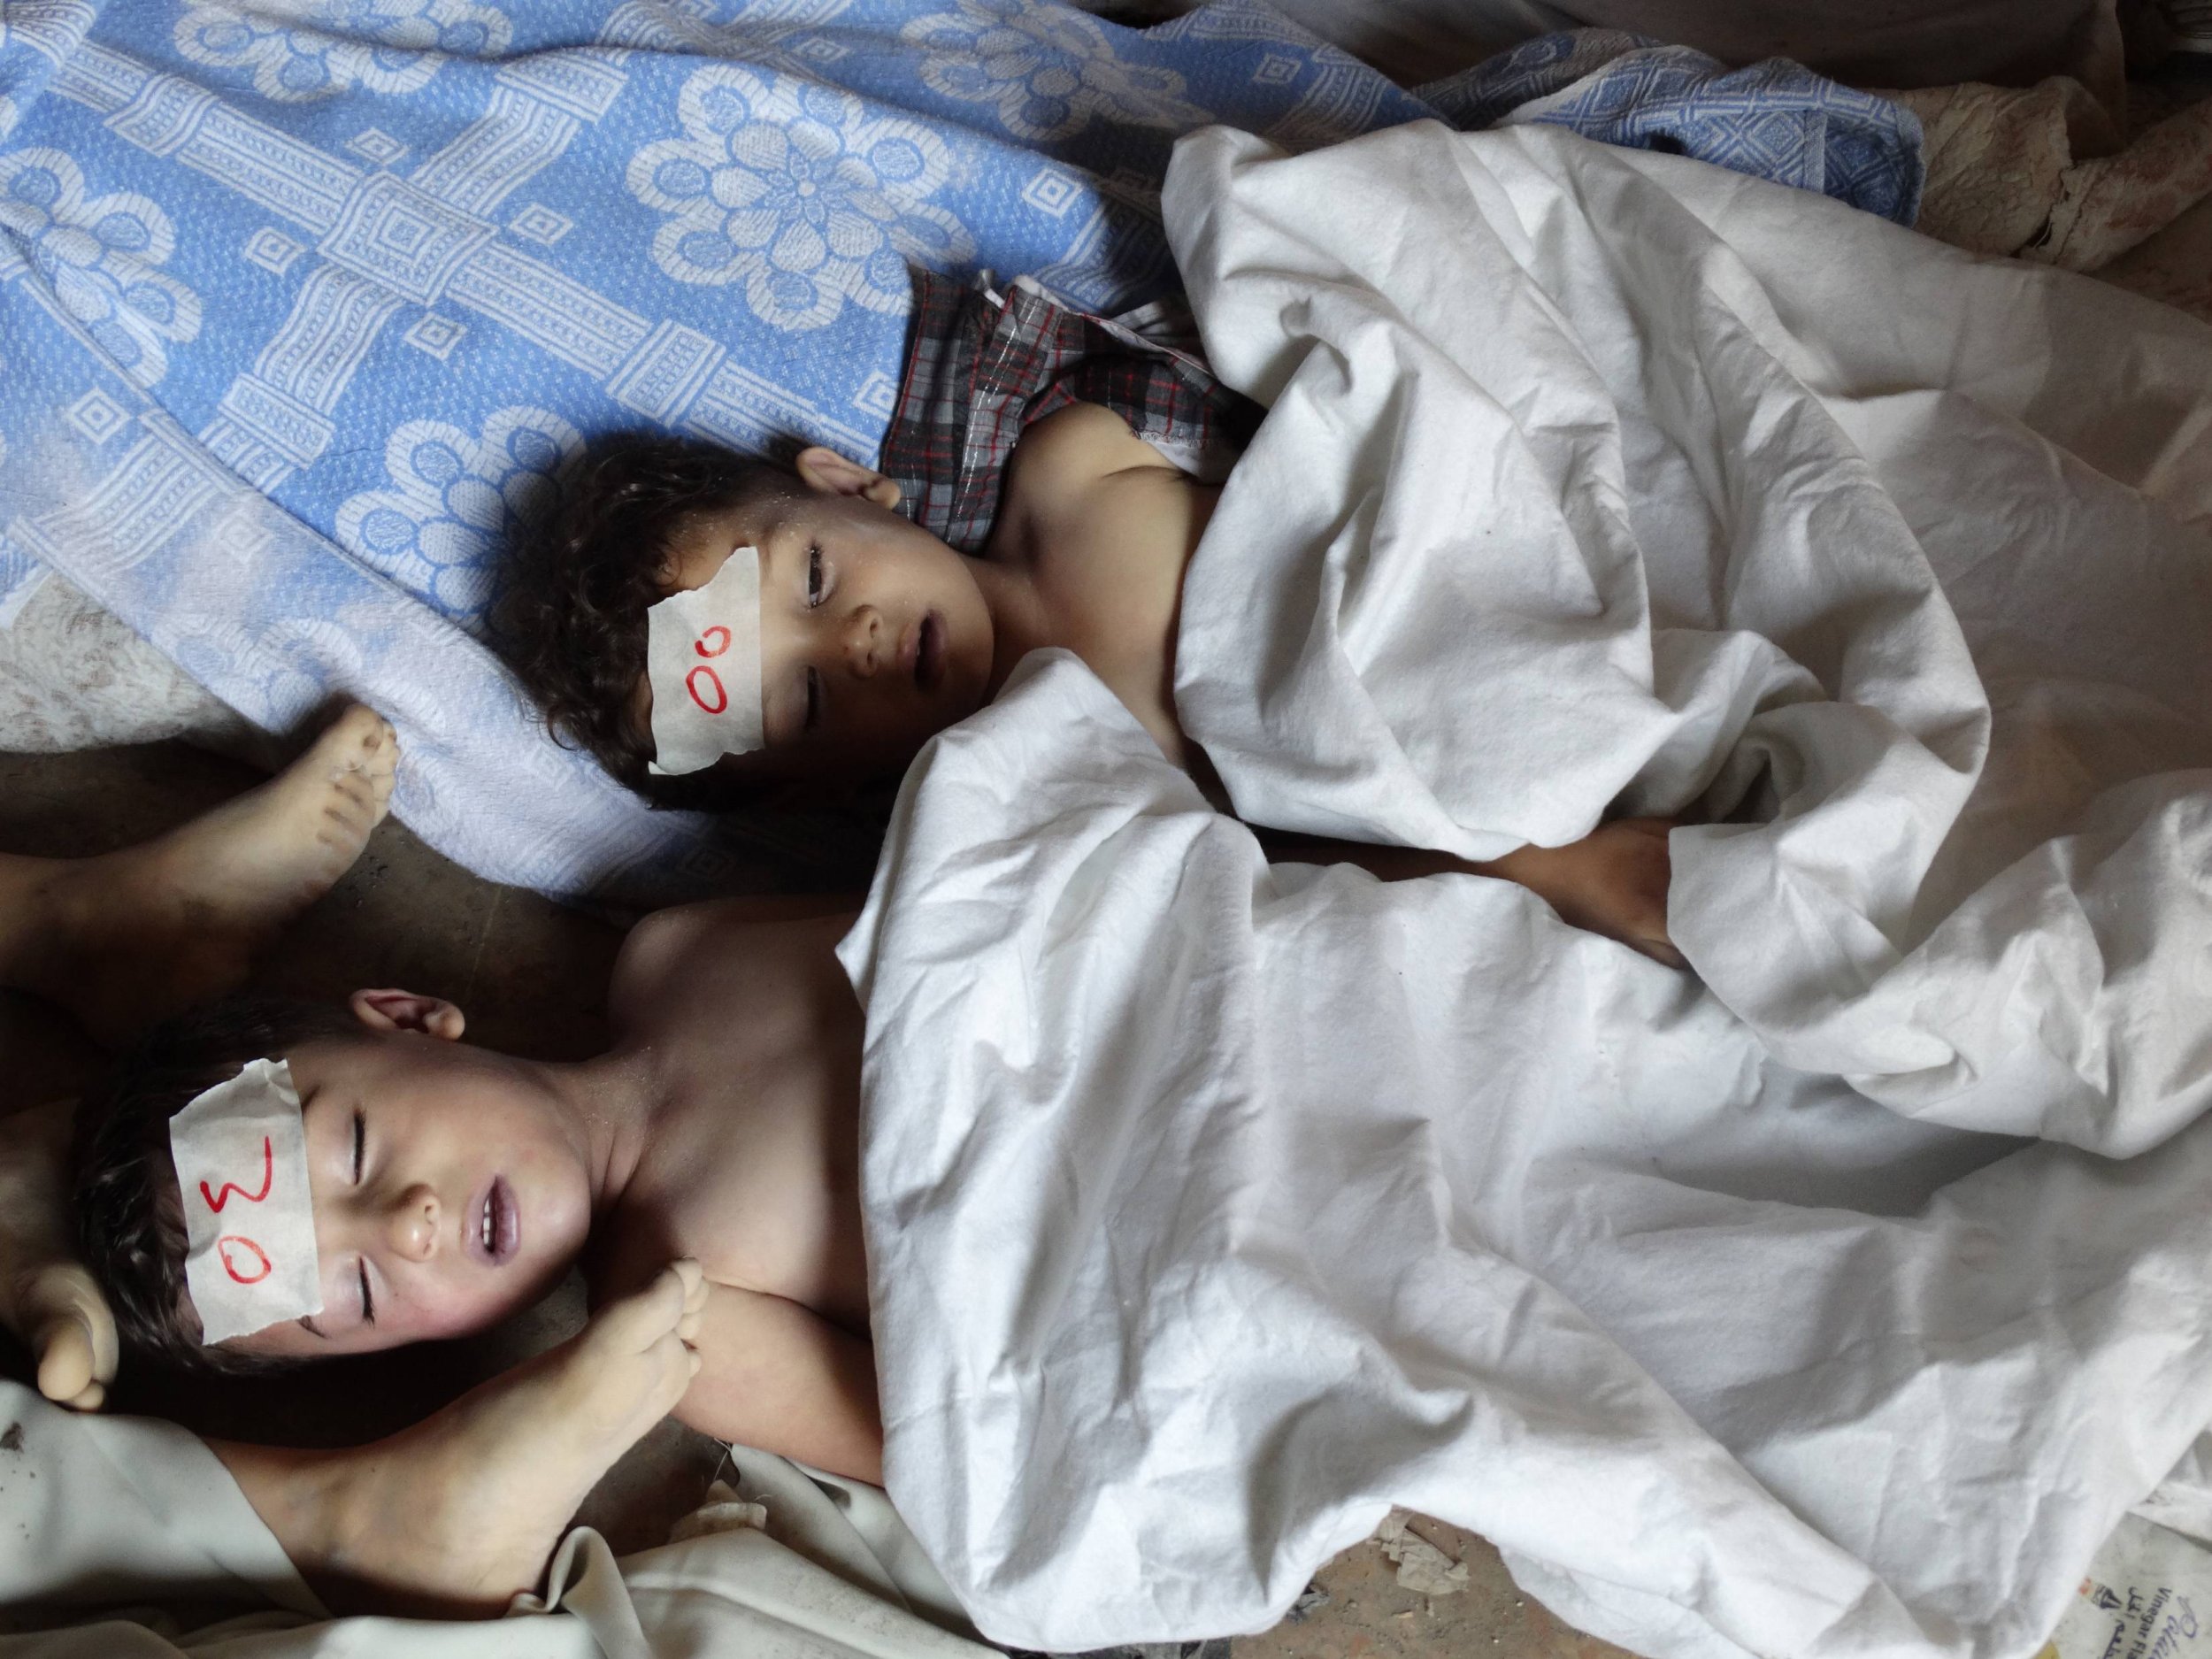 Syria casualties children gas attack